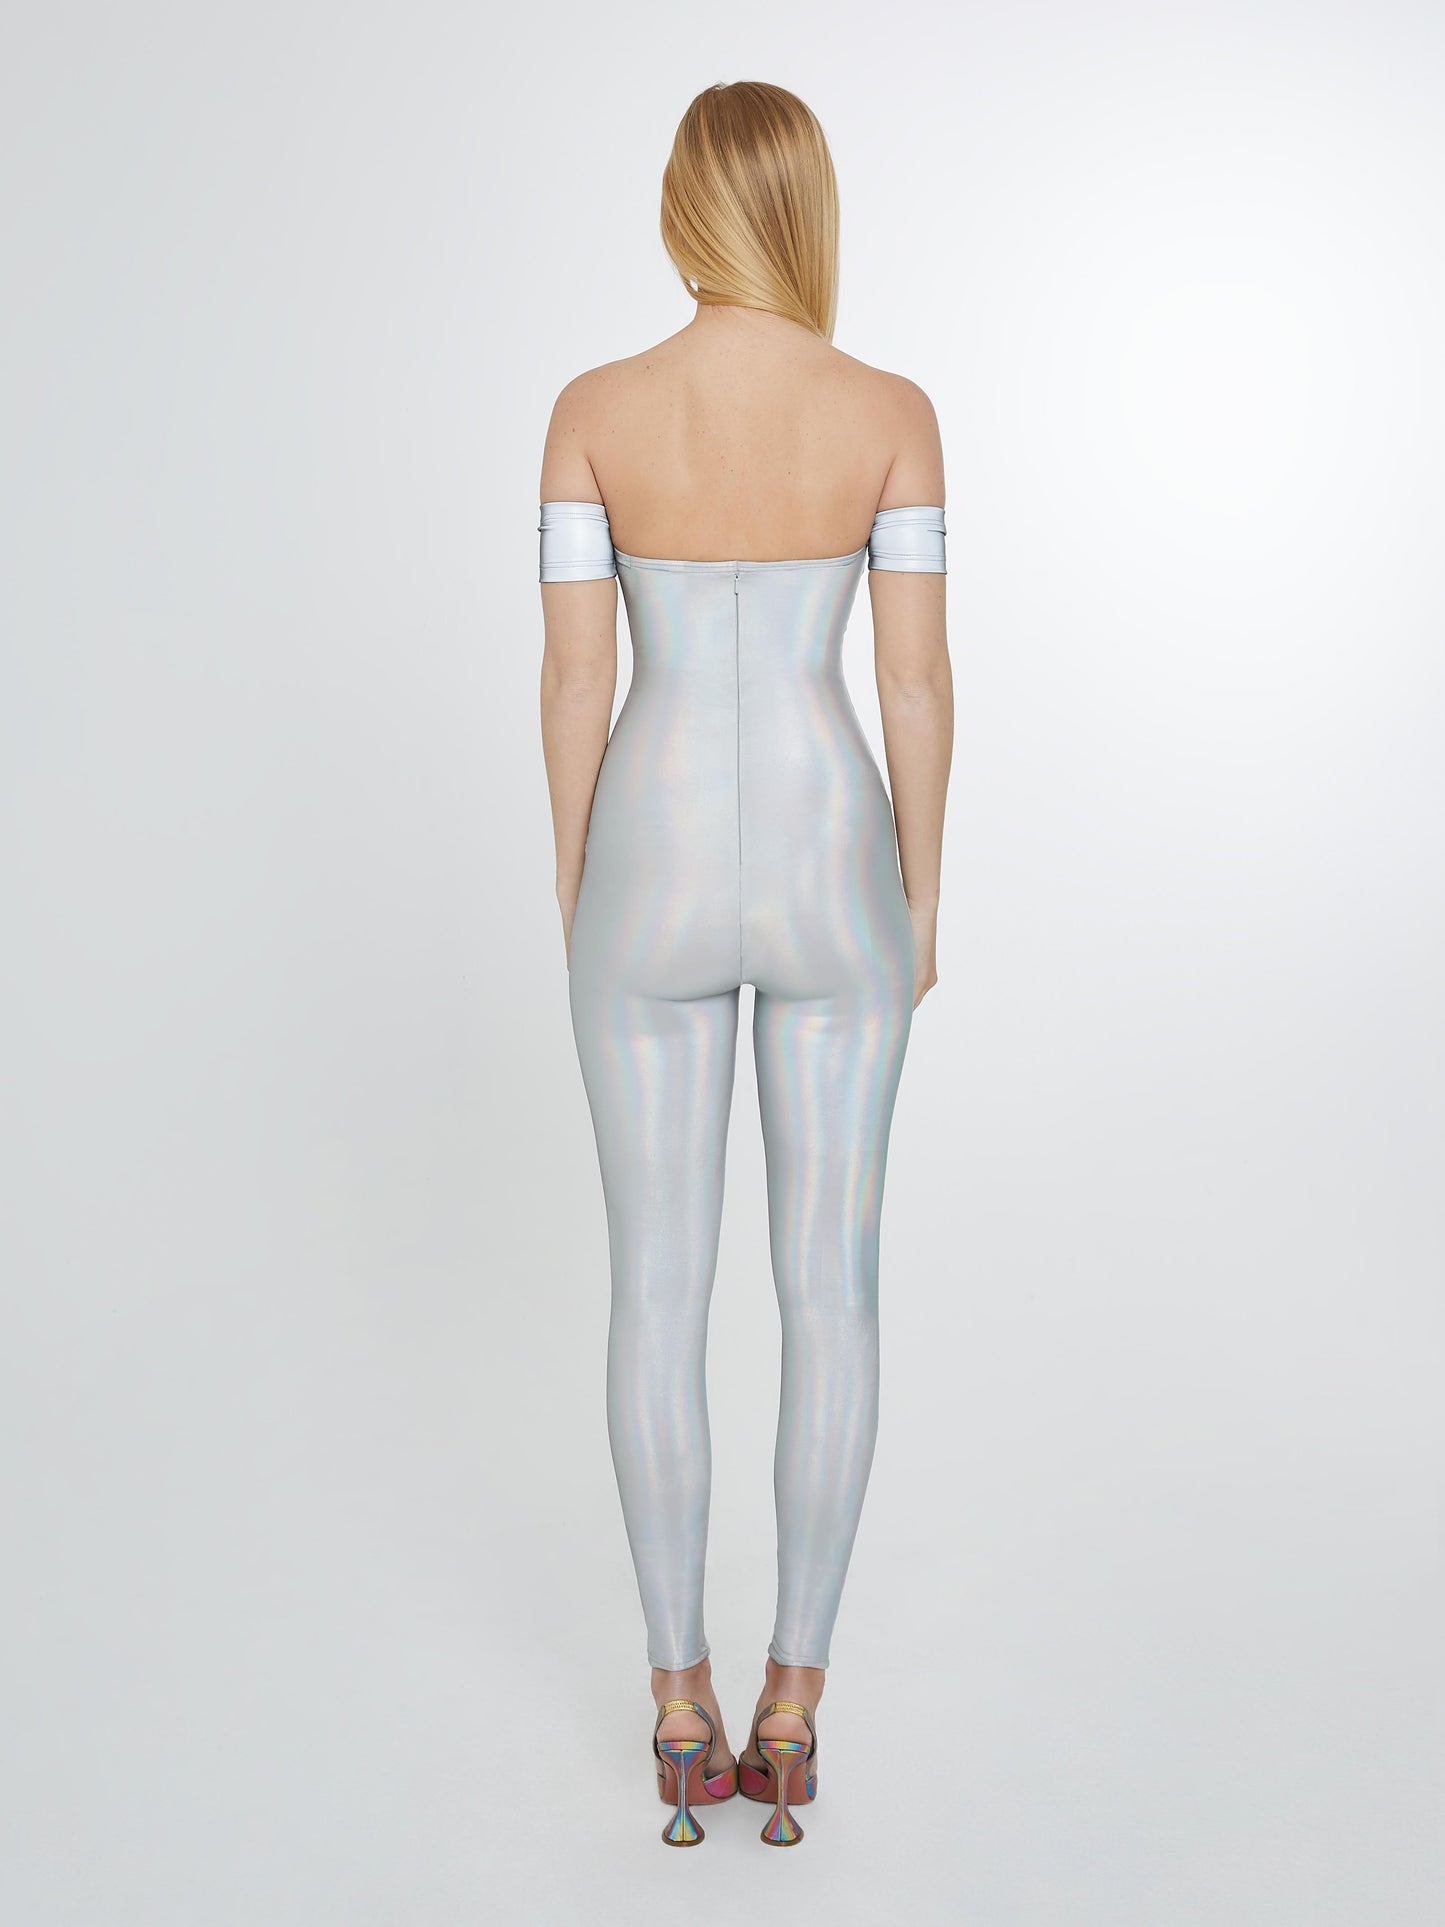 Iridescent bodysuit with reflective trim